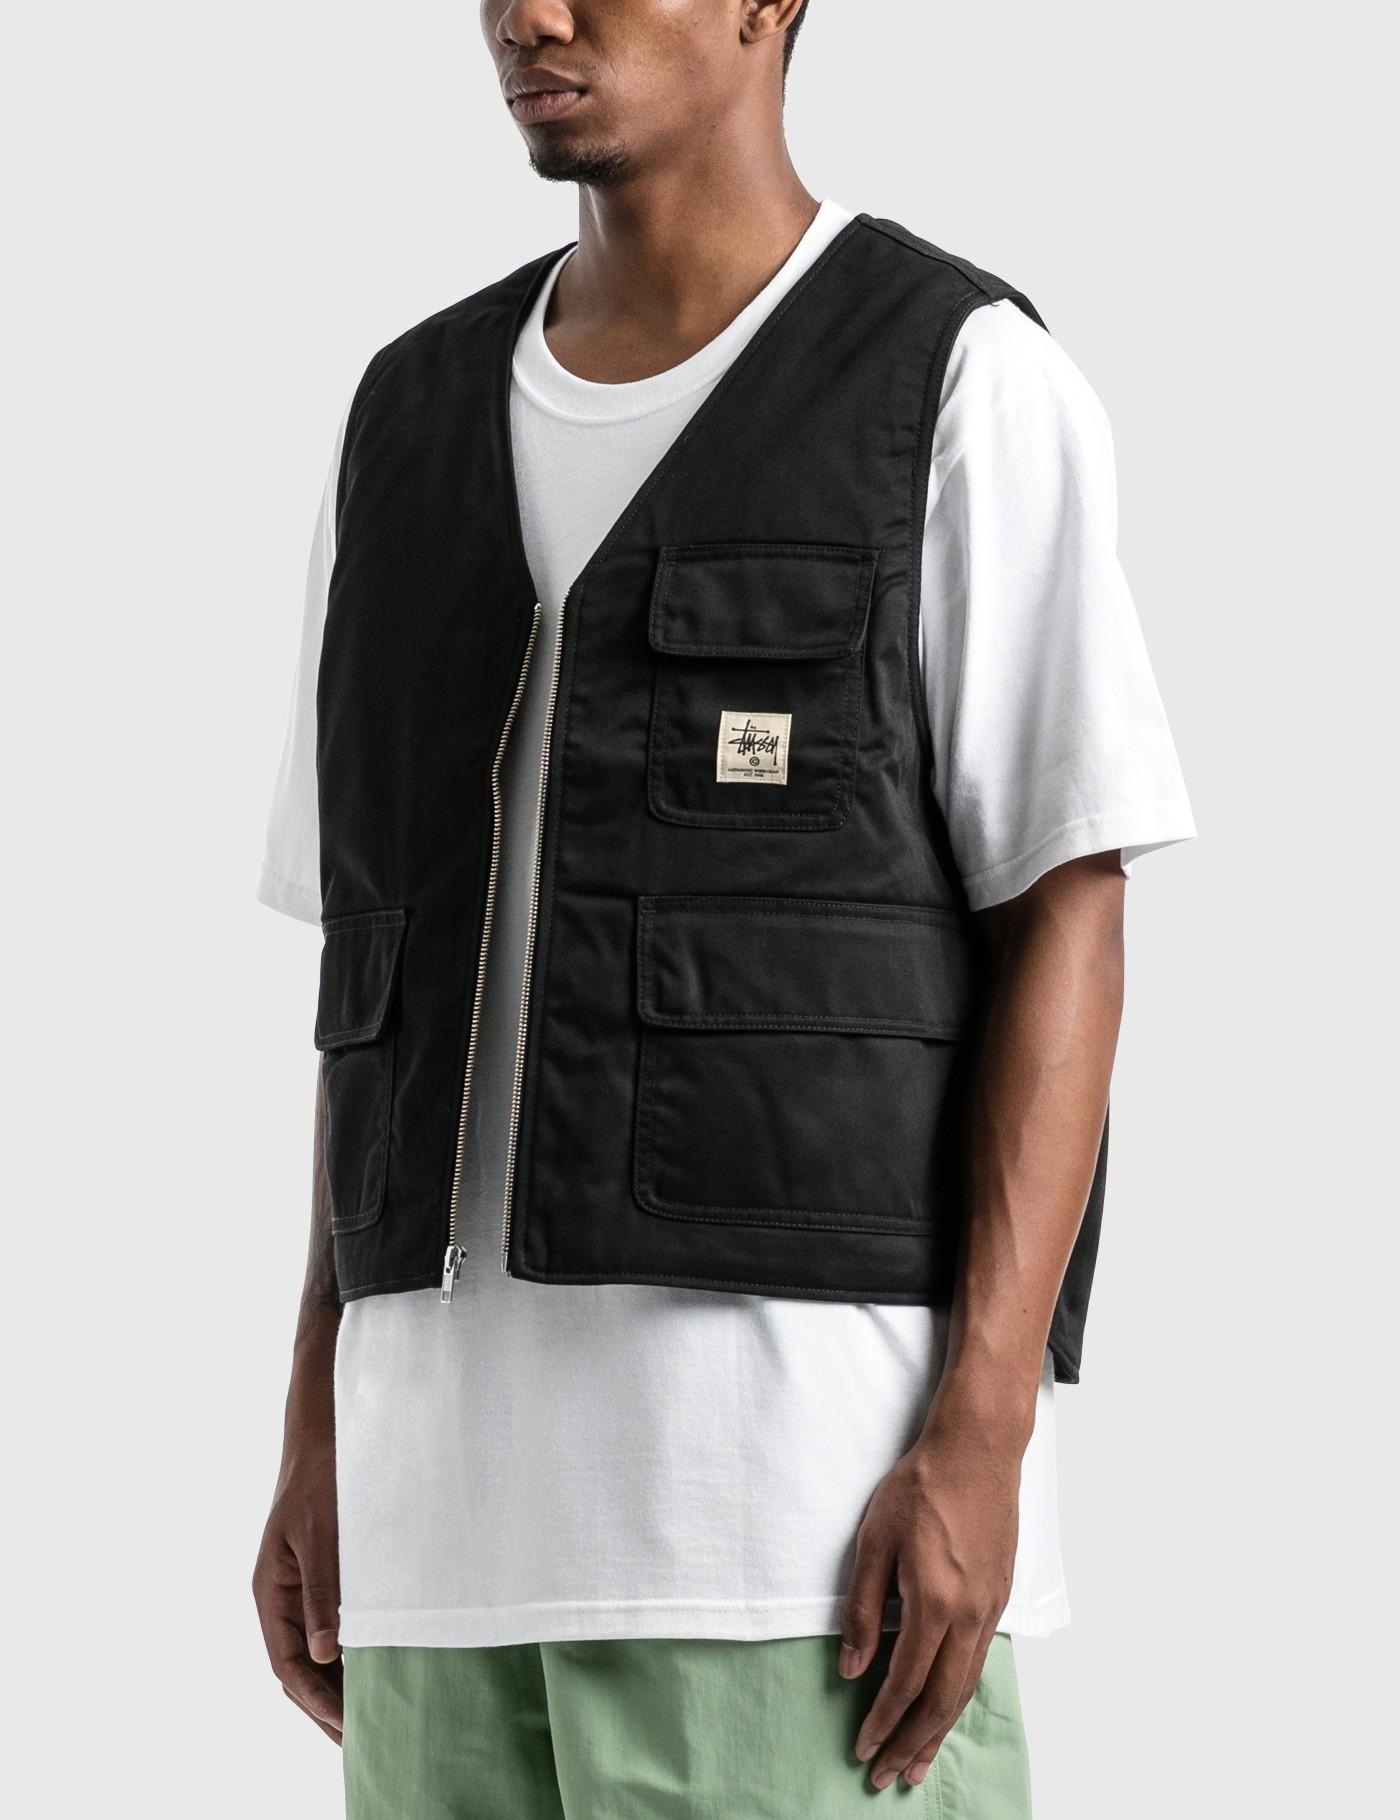 Stussy Insulated Work Vest in Black for Men - Lyst